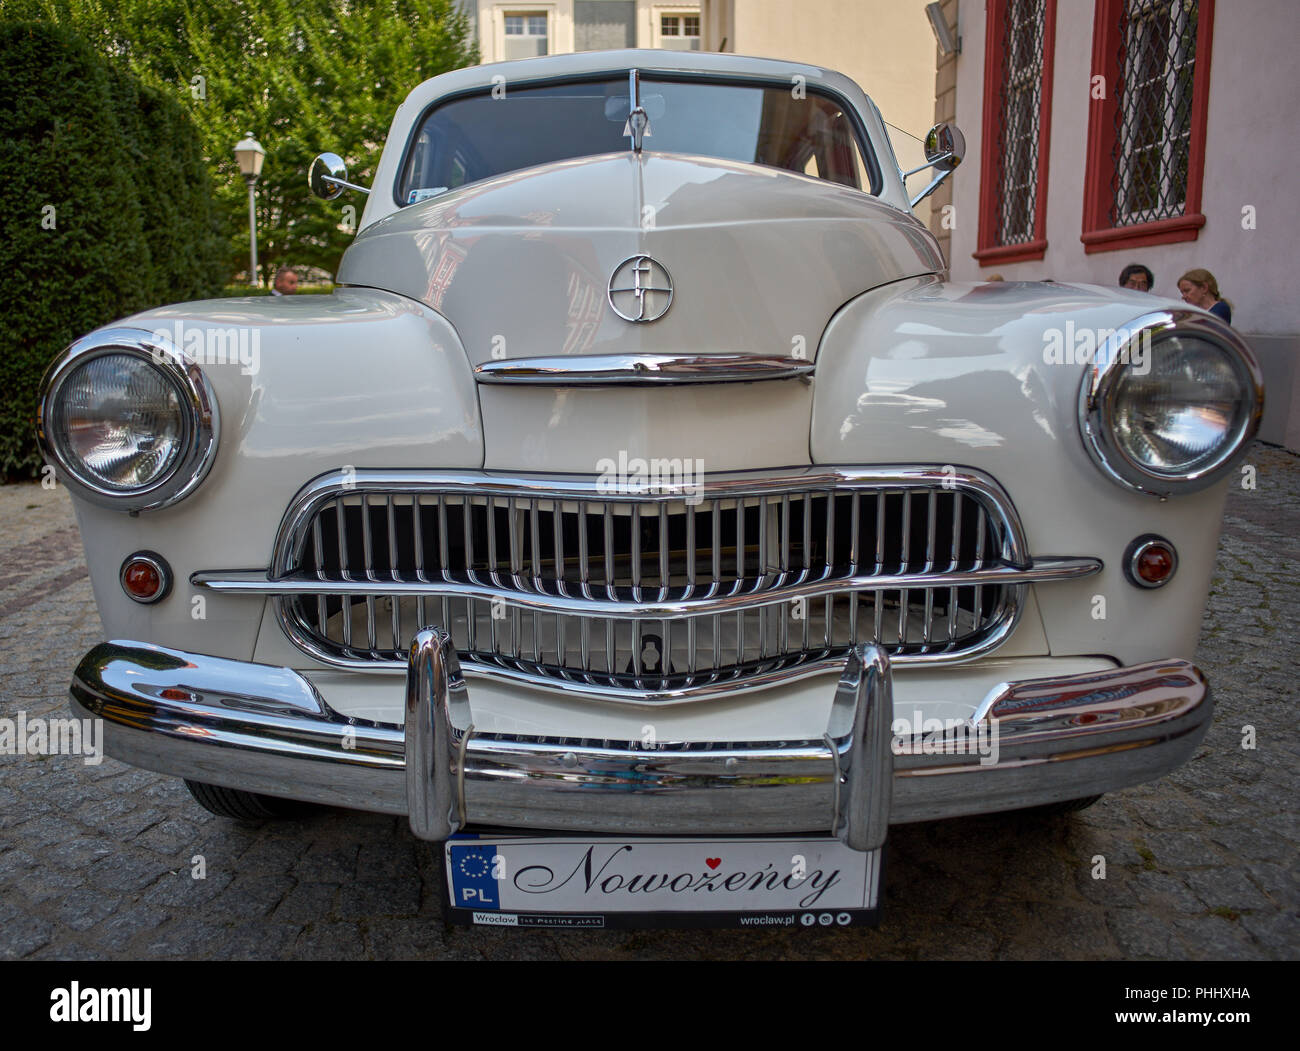 White vintage car Warszawa Stock Photo